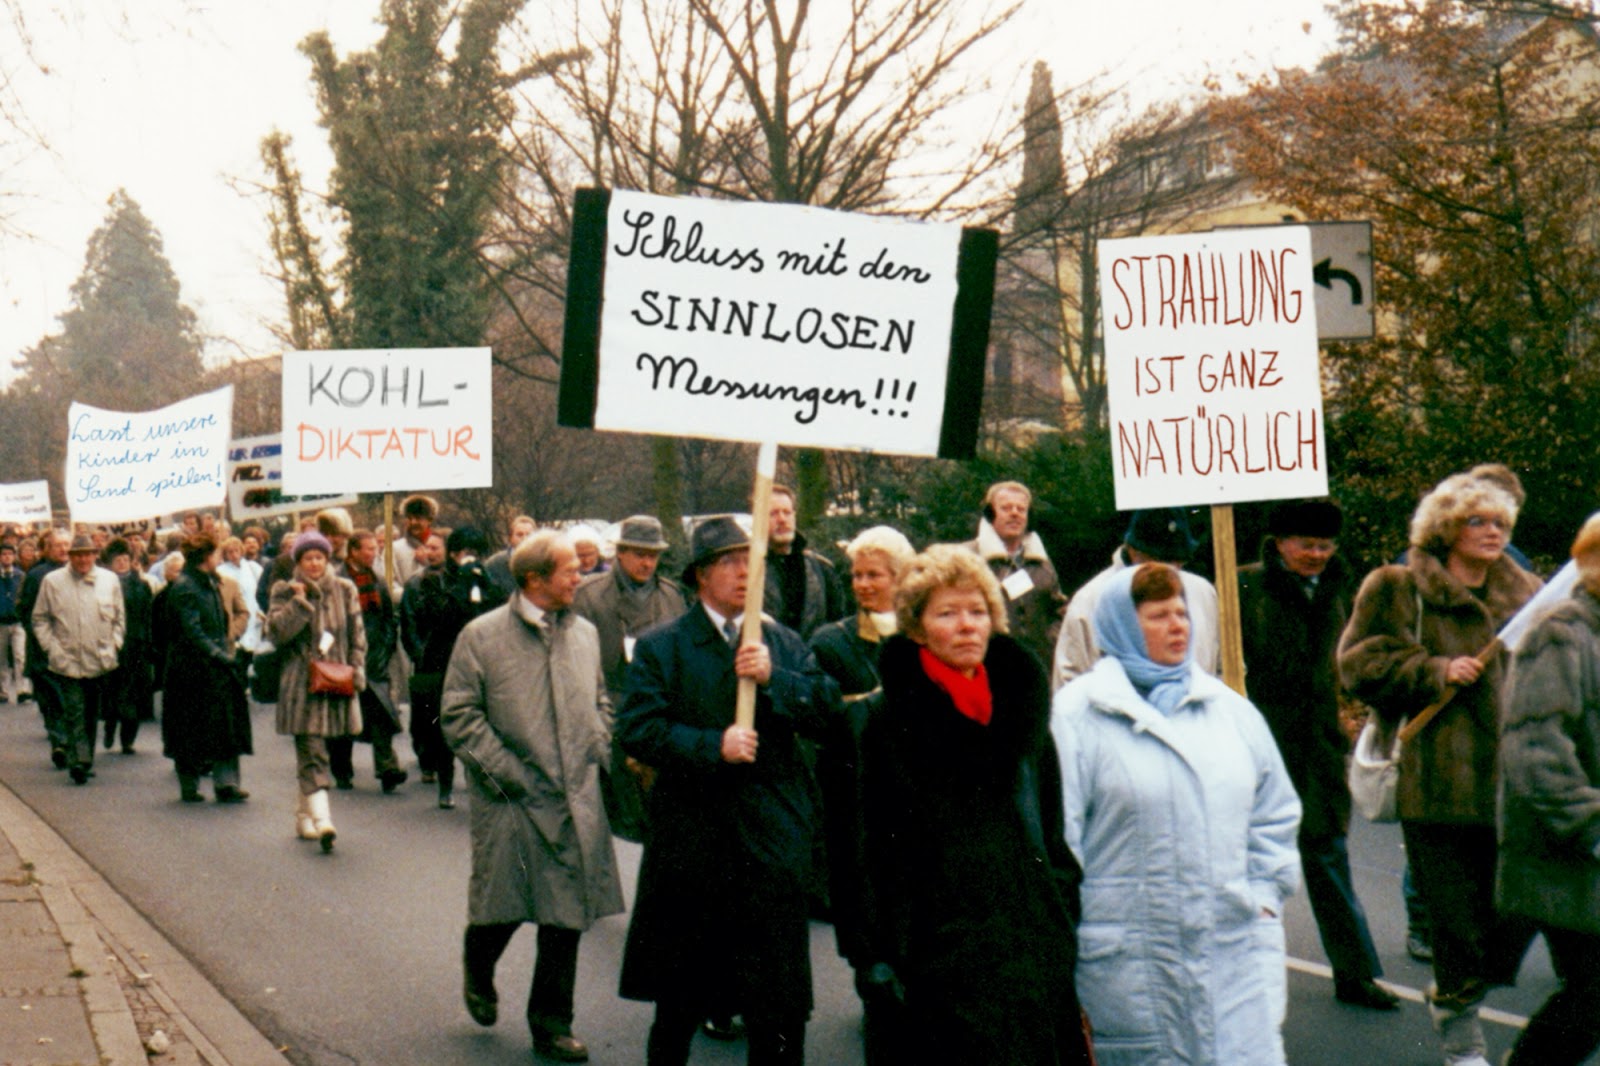 Kohl-Diktatur-Protest.jpg